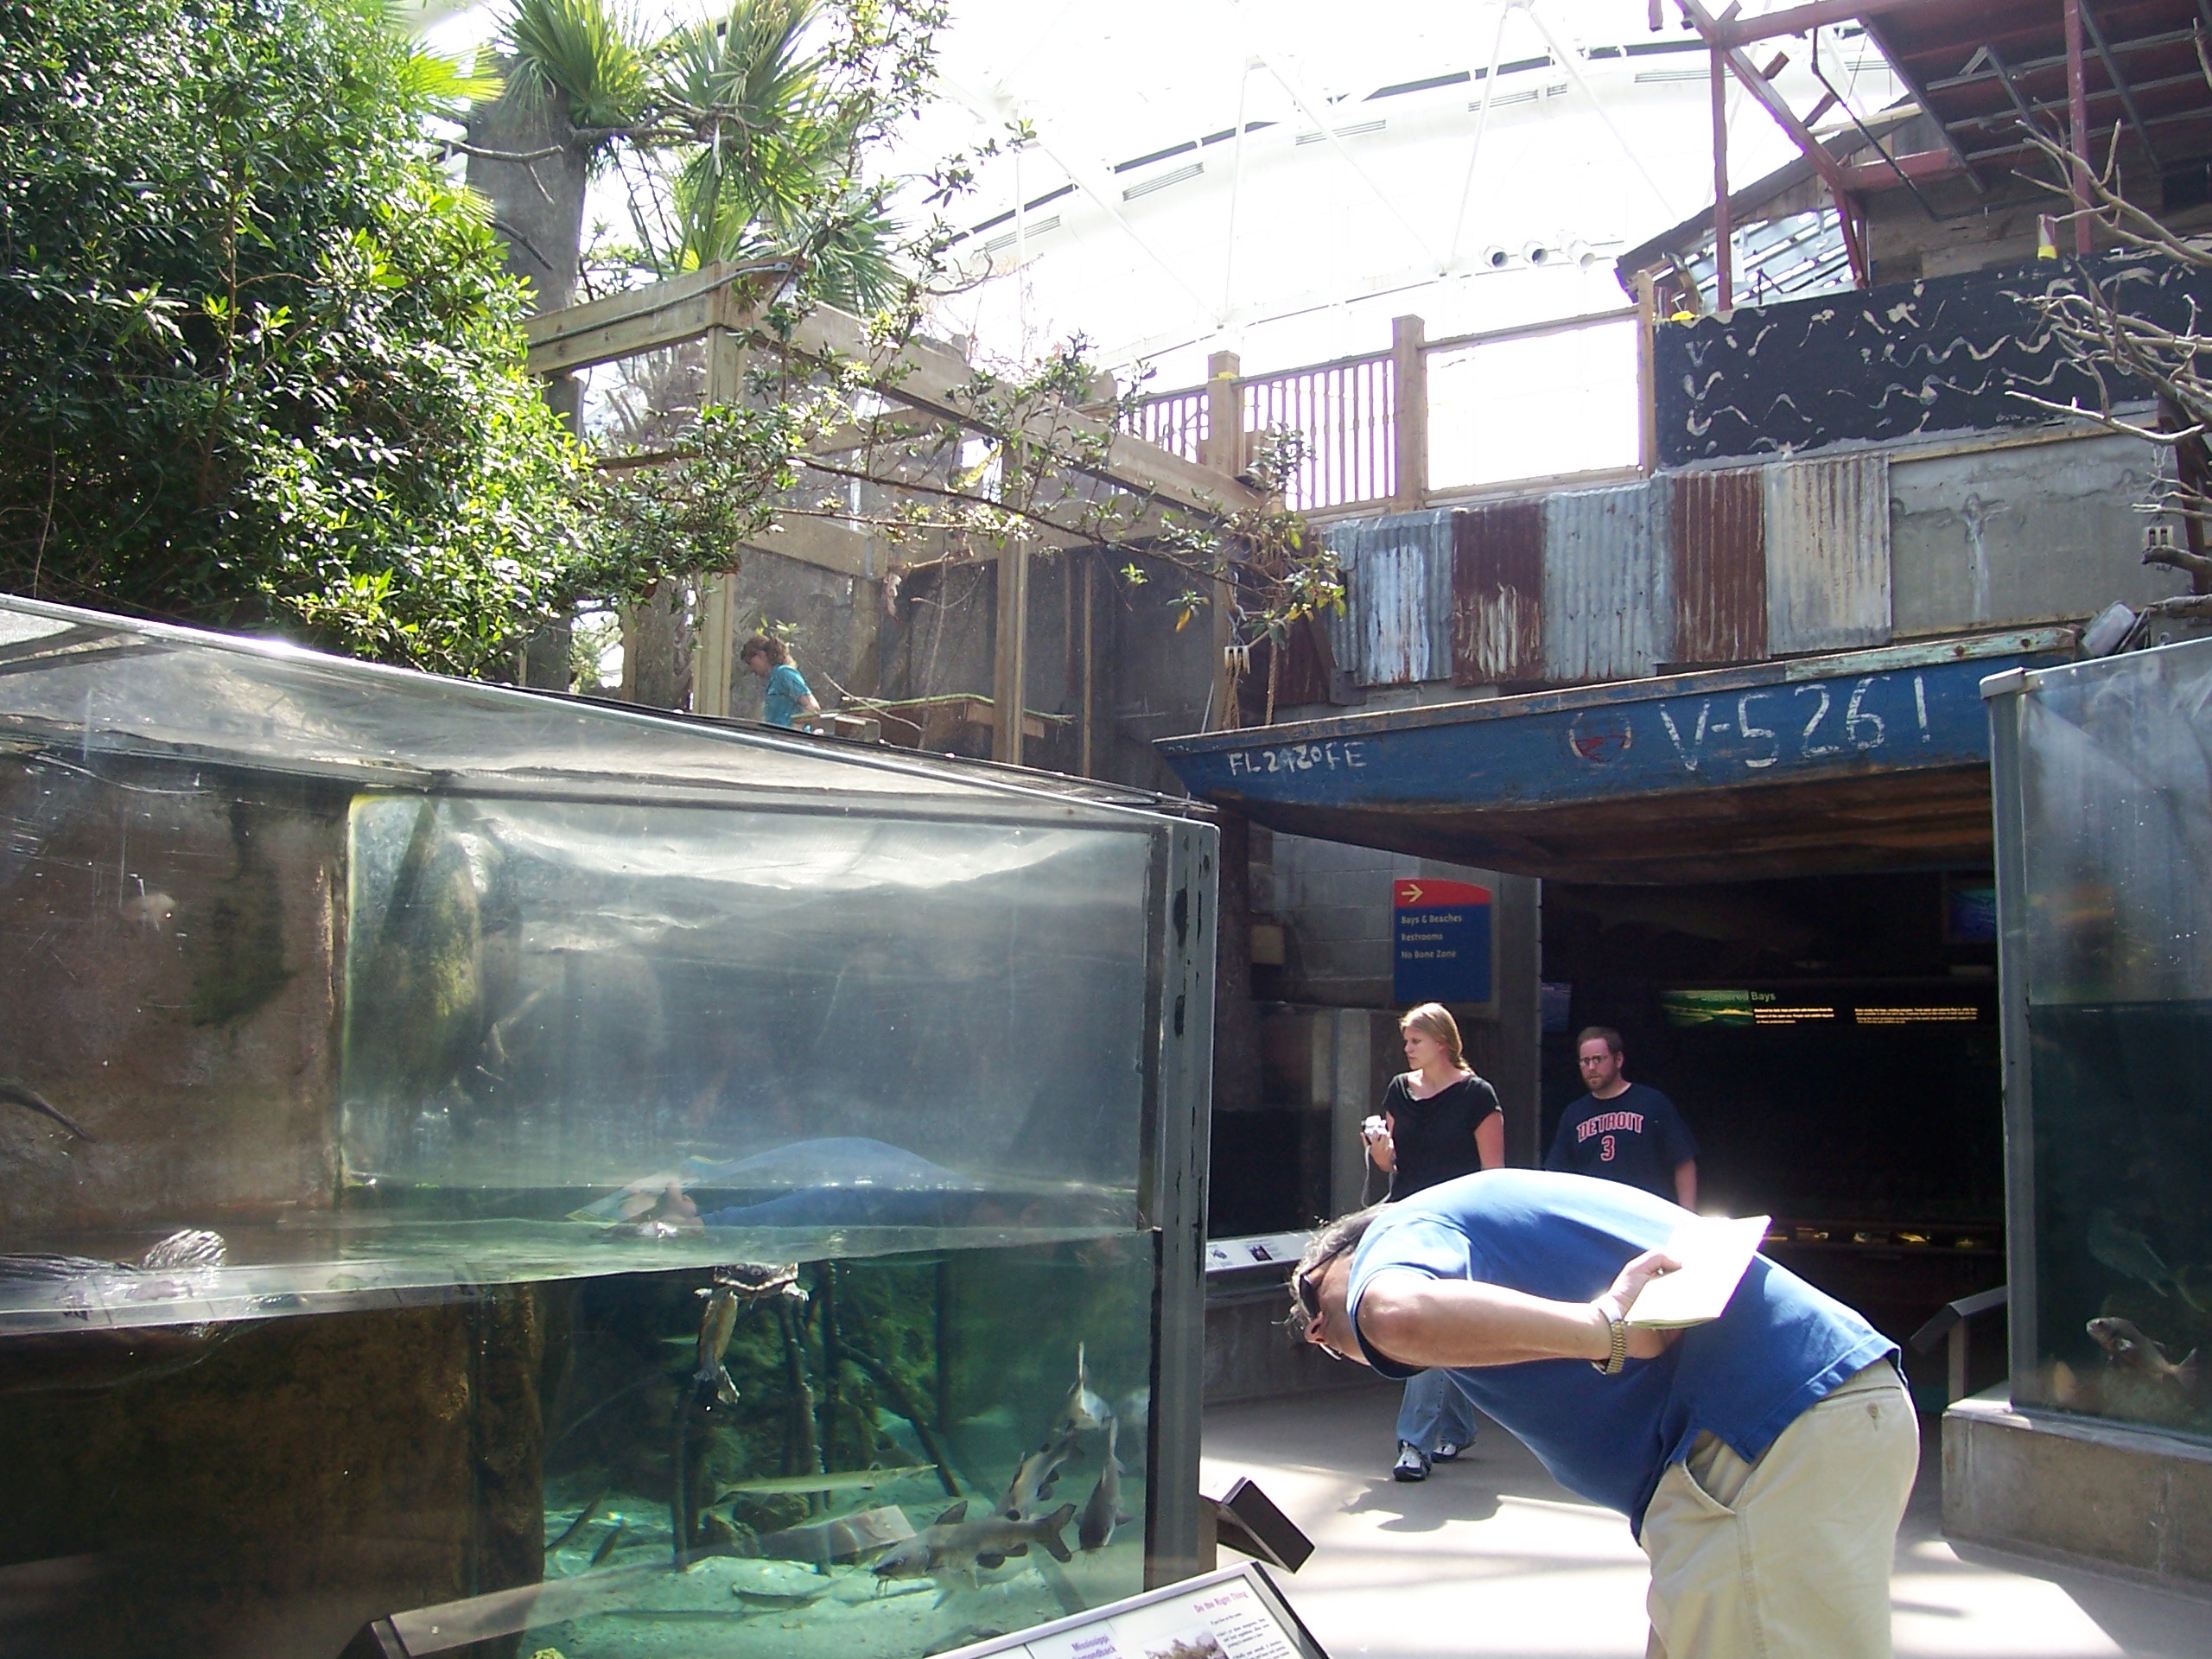 File:Florida Aquarium.jpg - Wikipedia